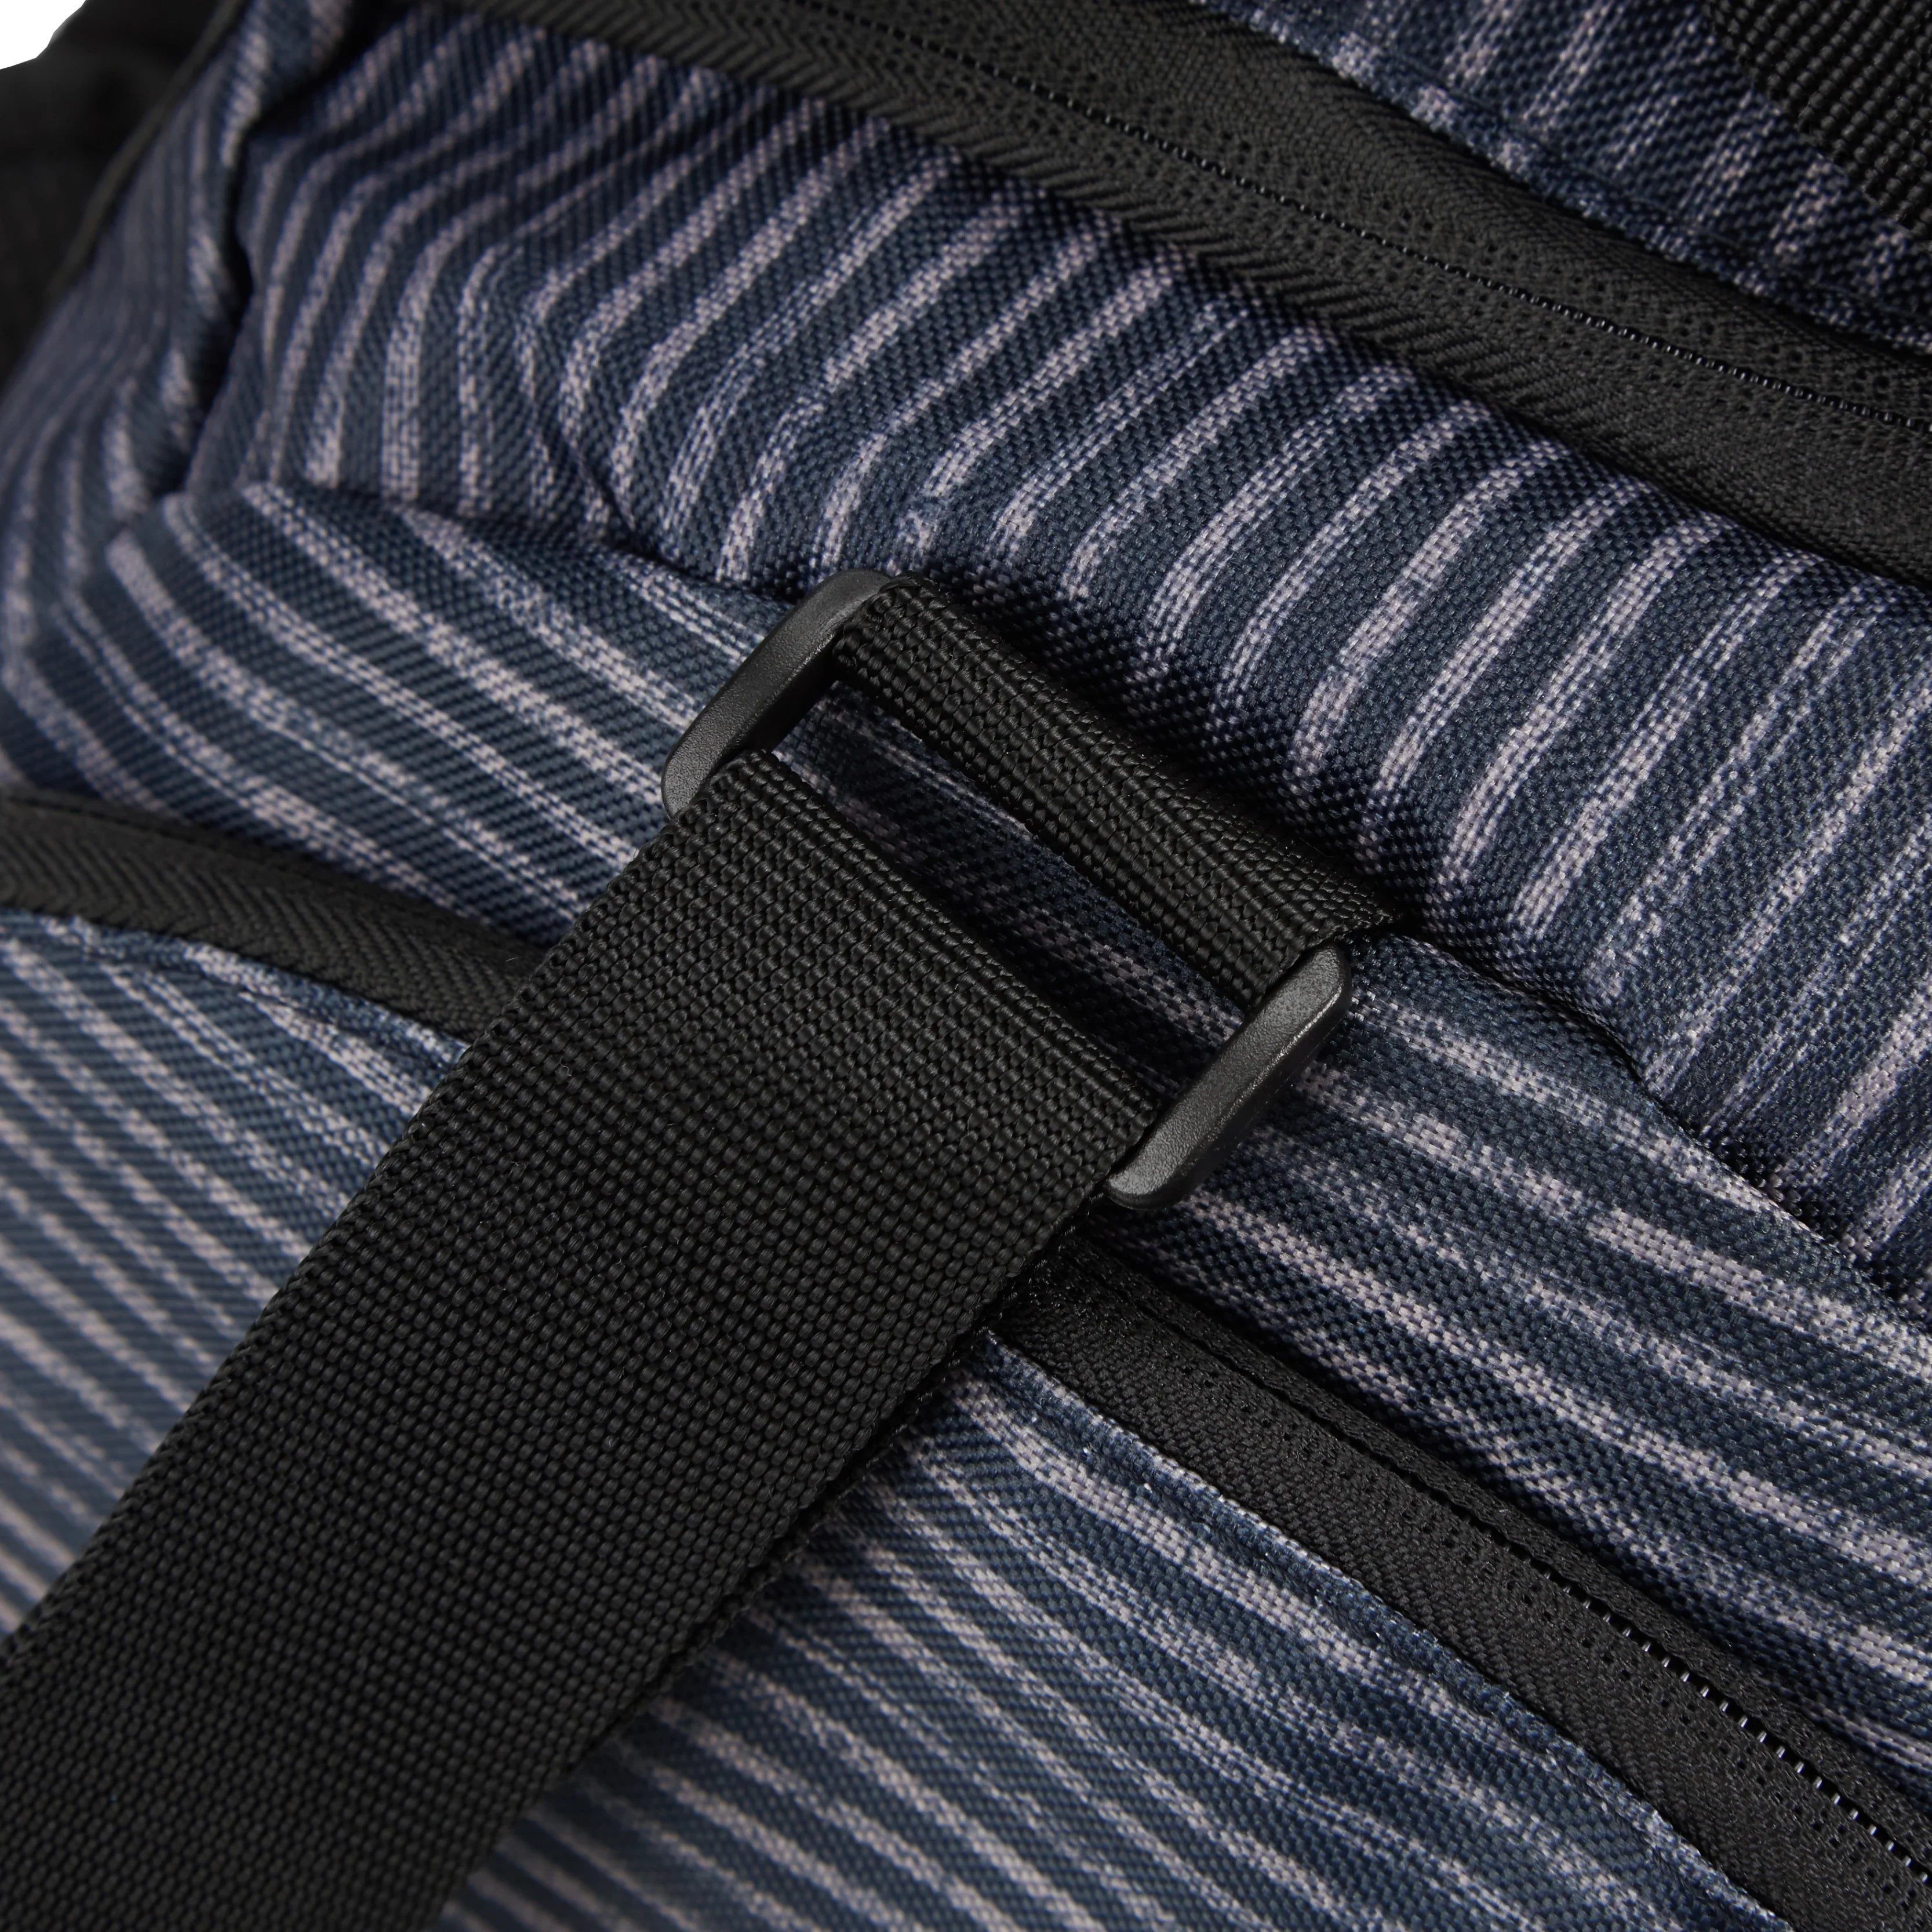 koffer-direkt.de Two Travel II Travel bag 46 cm - blue stripe